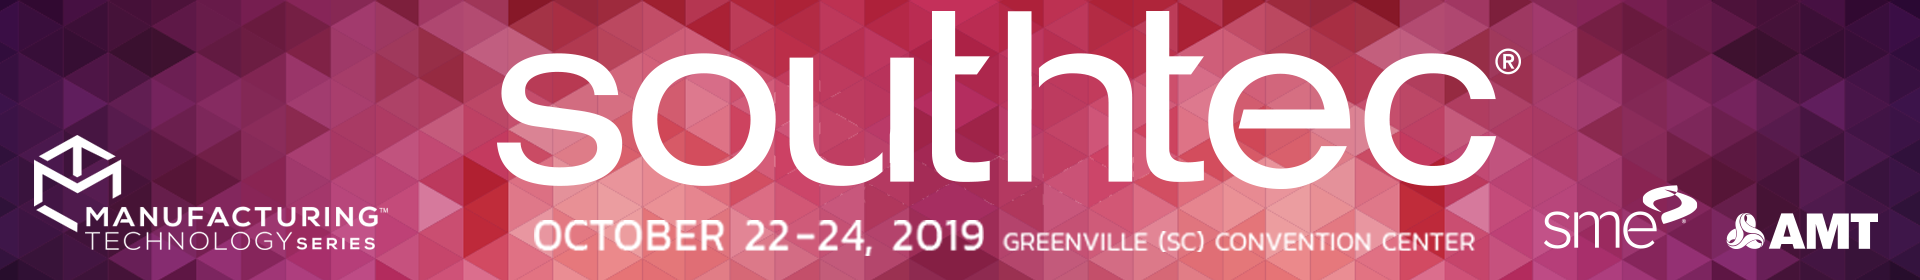 SOUTHTEC   2019 Event Banner